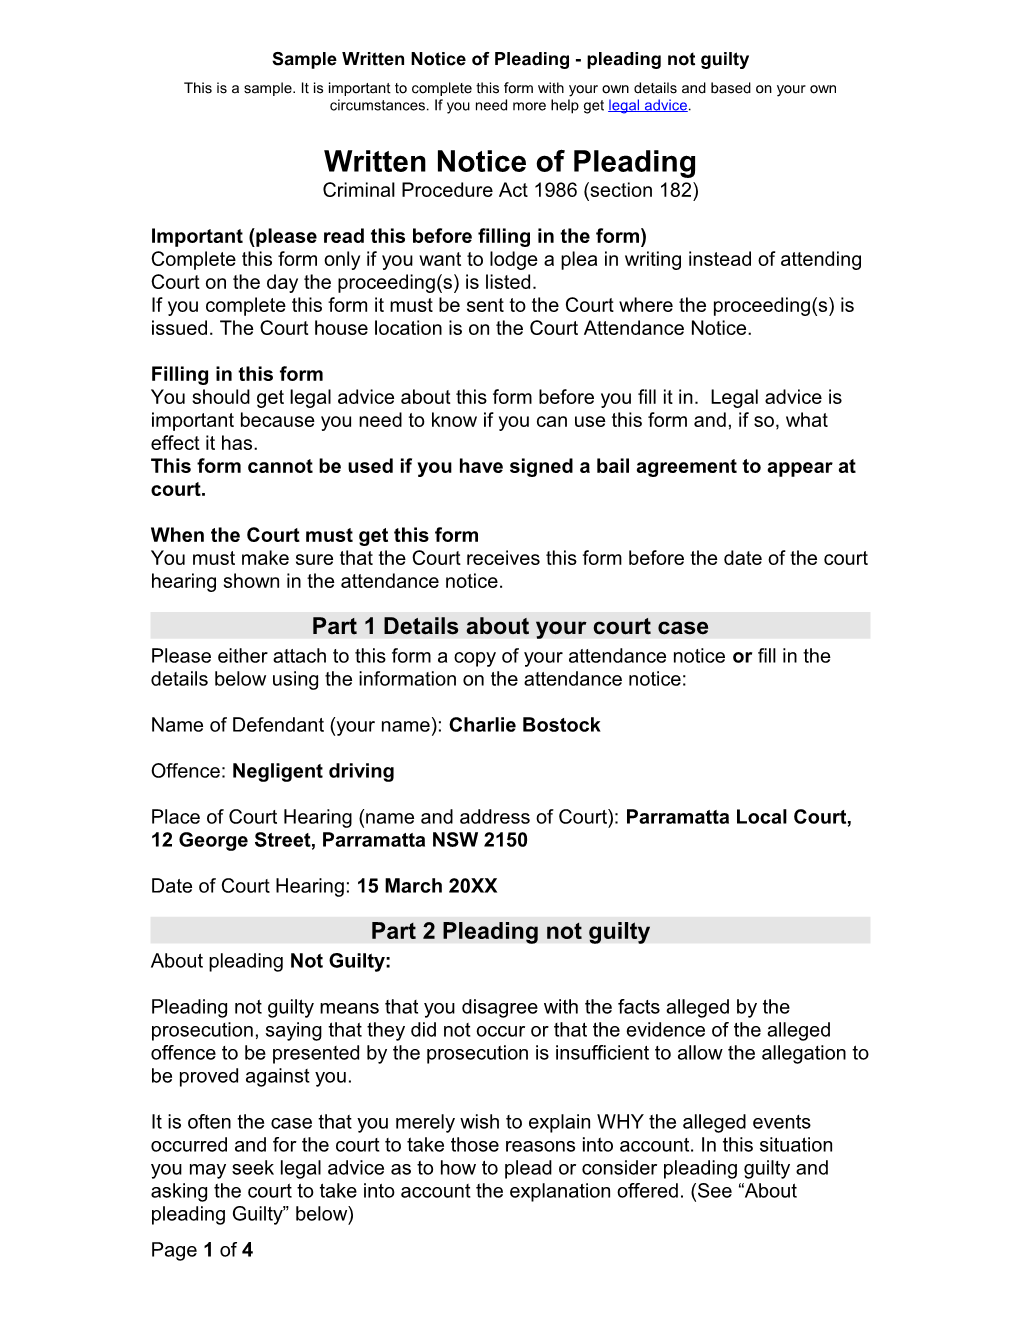 Written Notice of Pleading Form